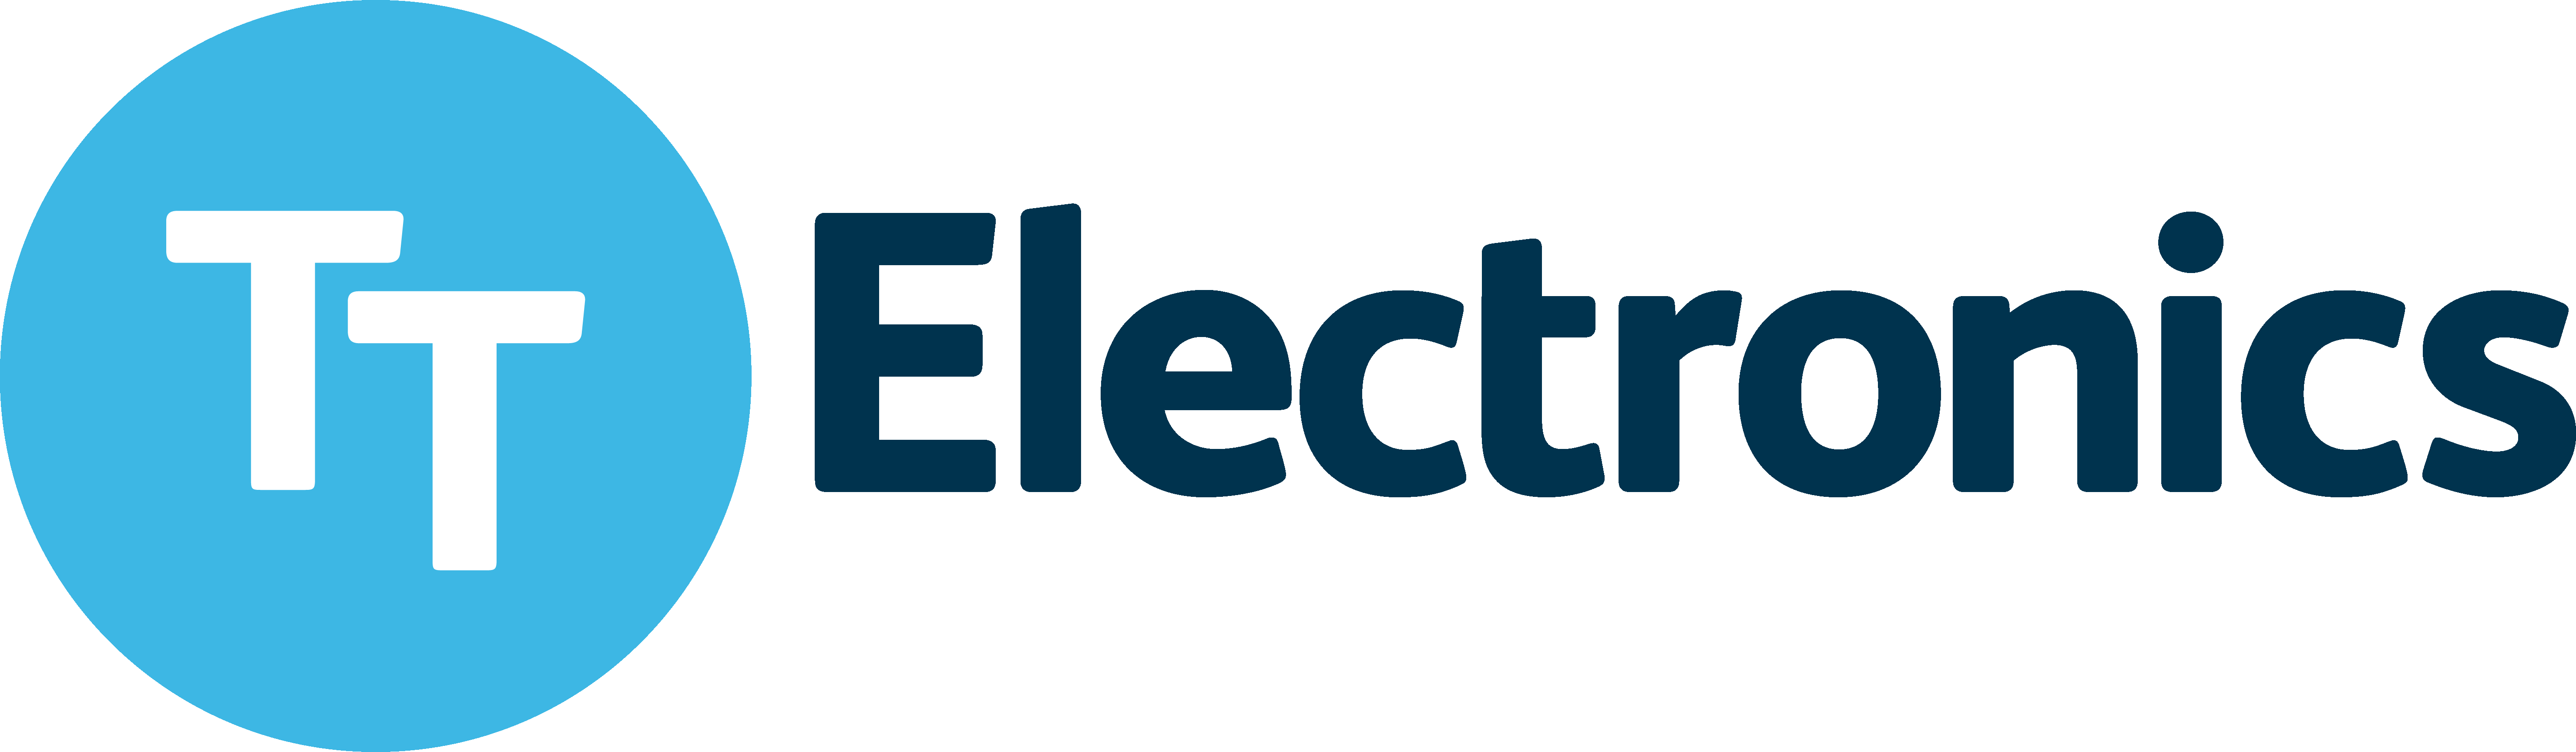 TT Electronics AB Connectors Logo